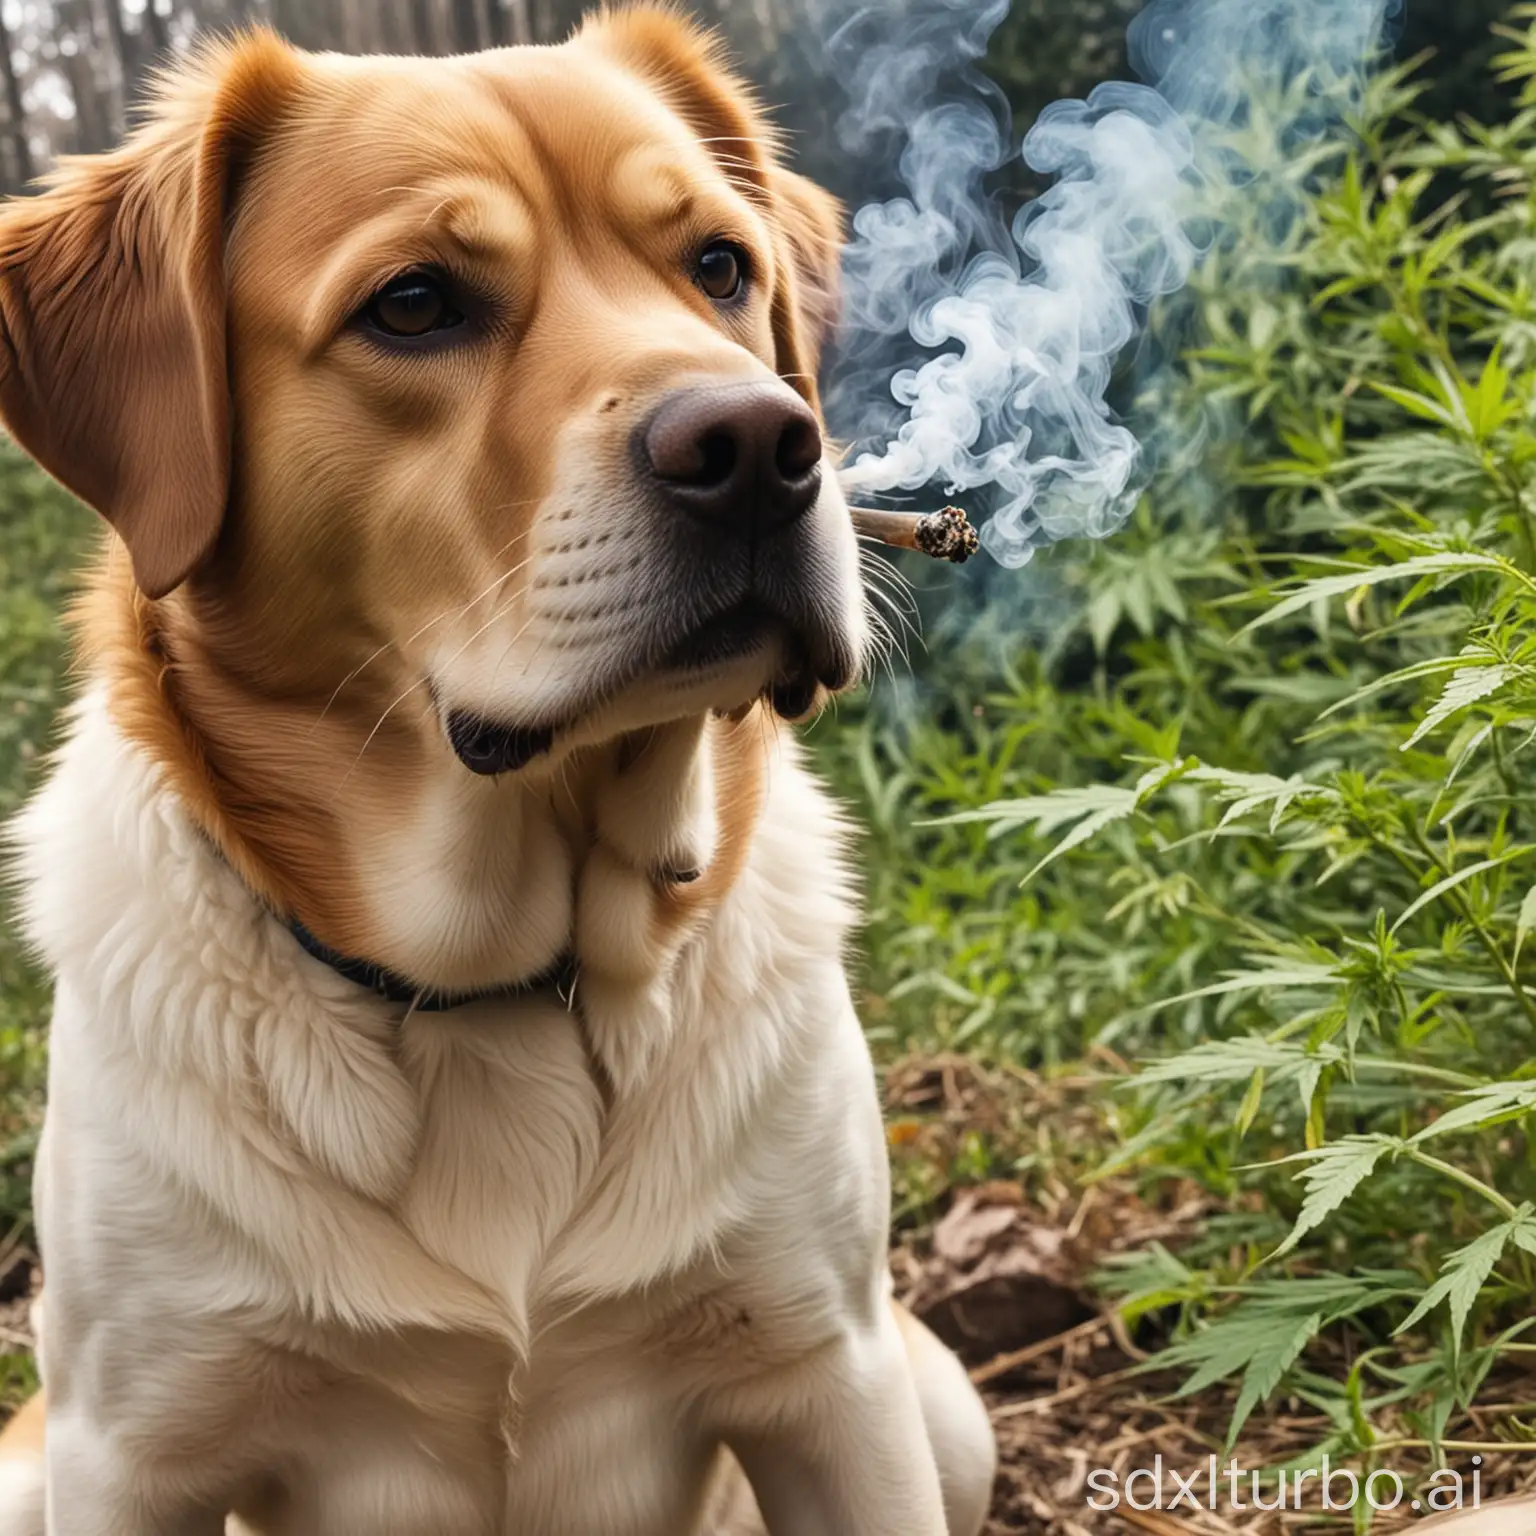 Canine-Enjoying-Cannabis